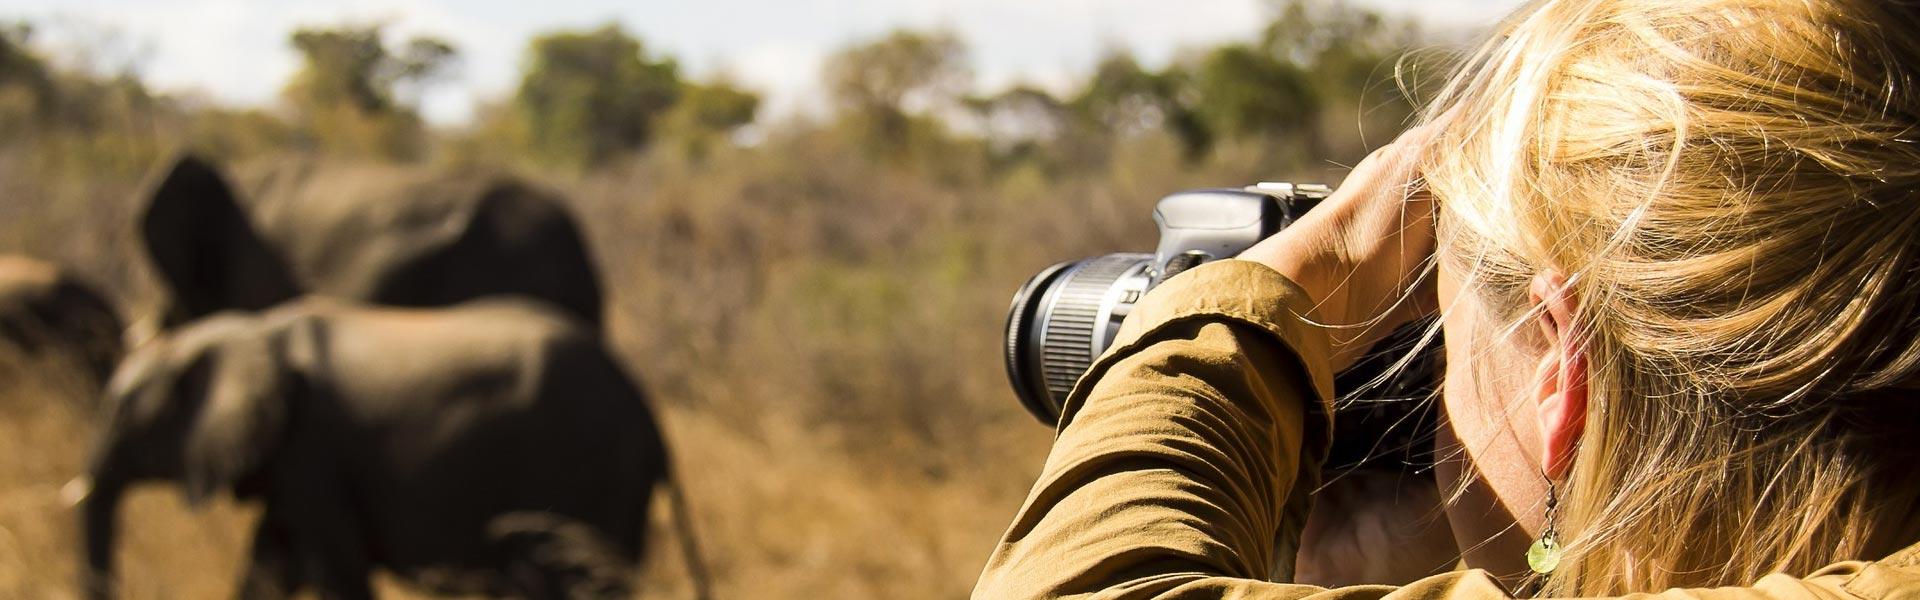 Tanzania wildlife photography safari